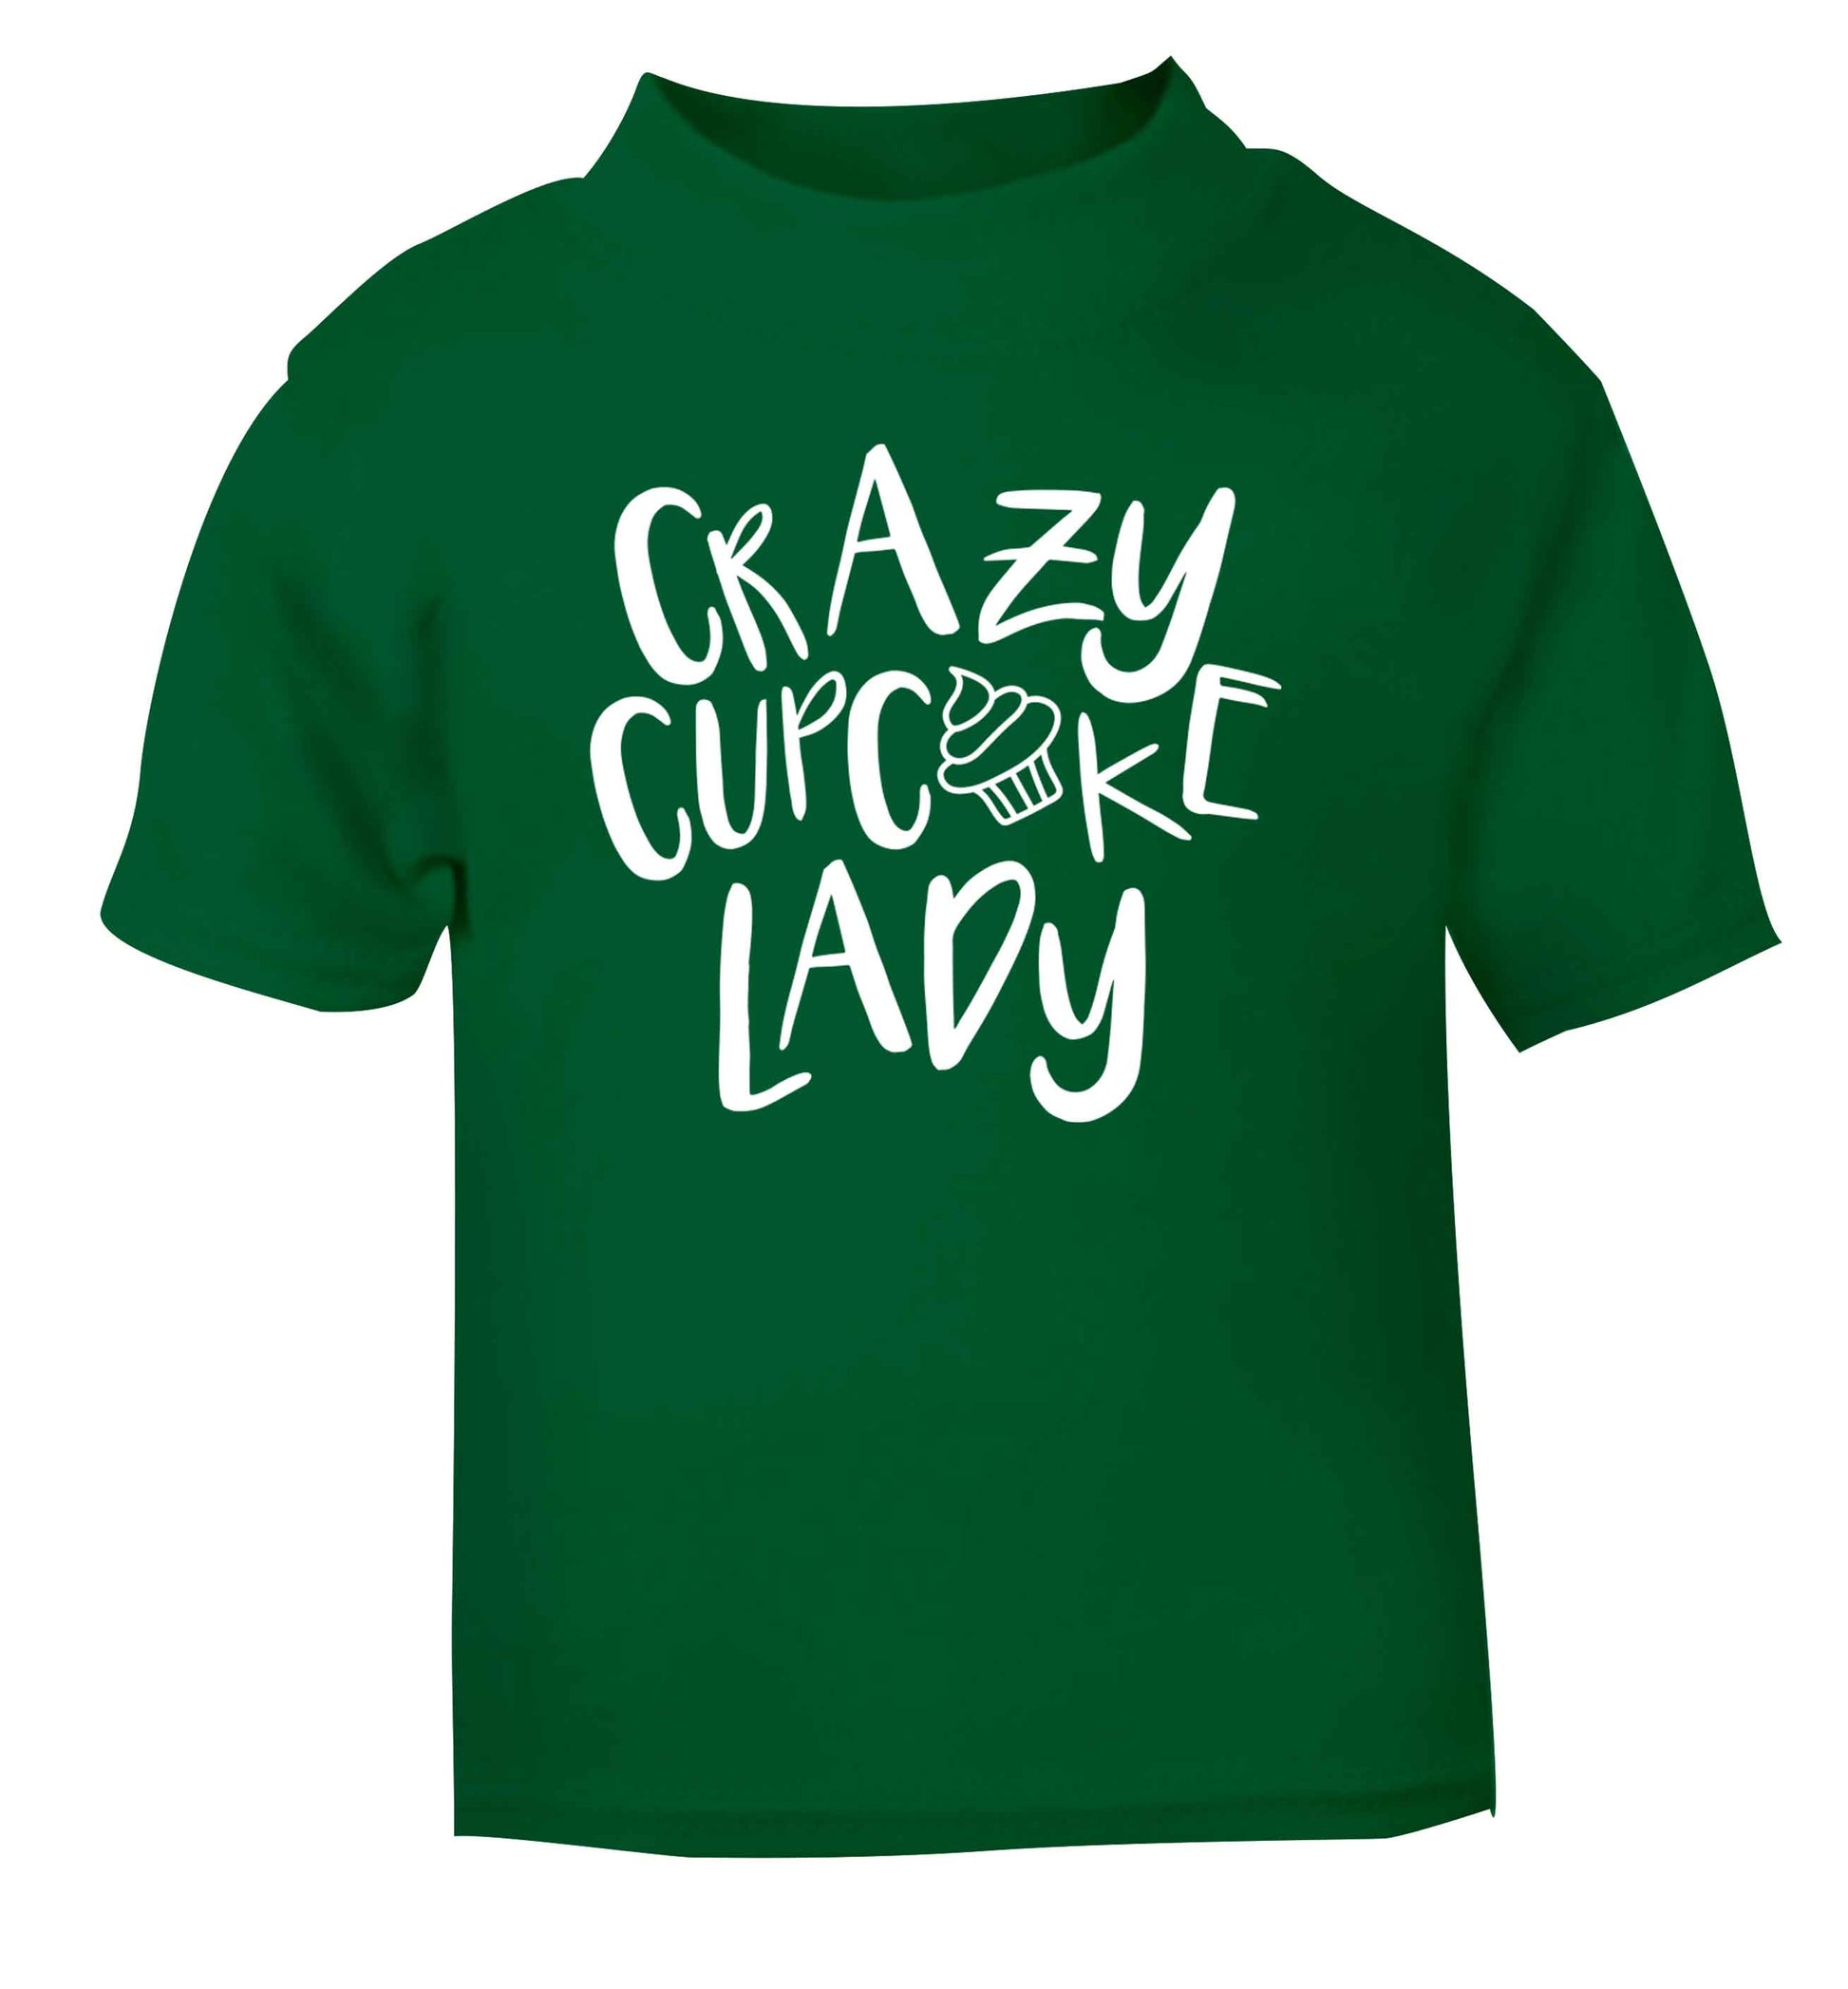 Crazy cupcake lady green Baby Toddler Tshirt 2 Years